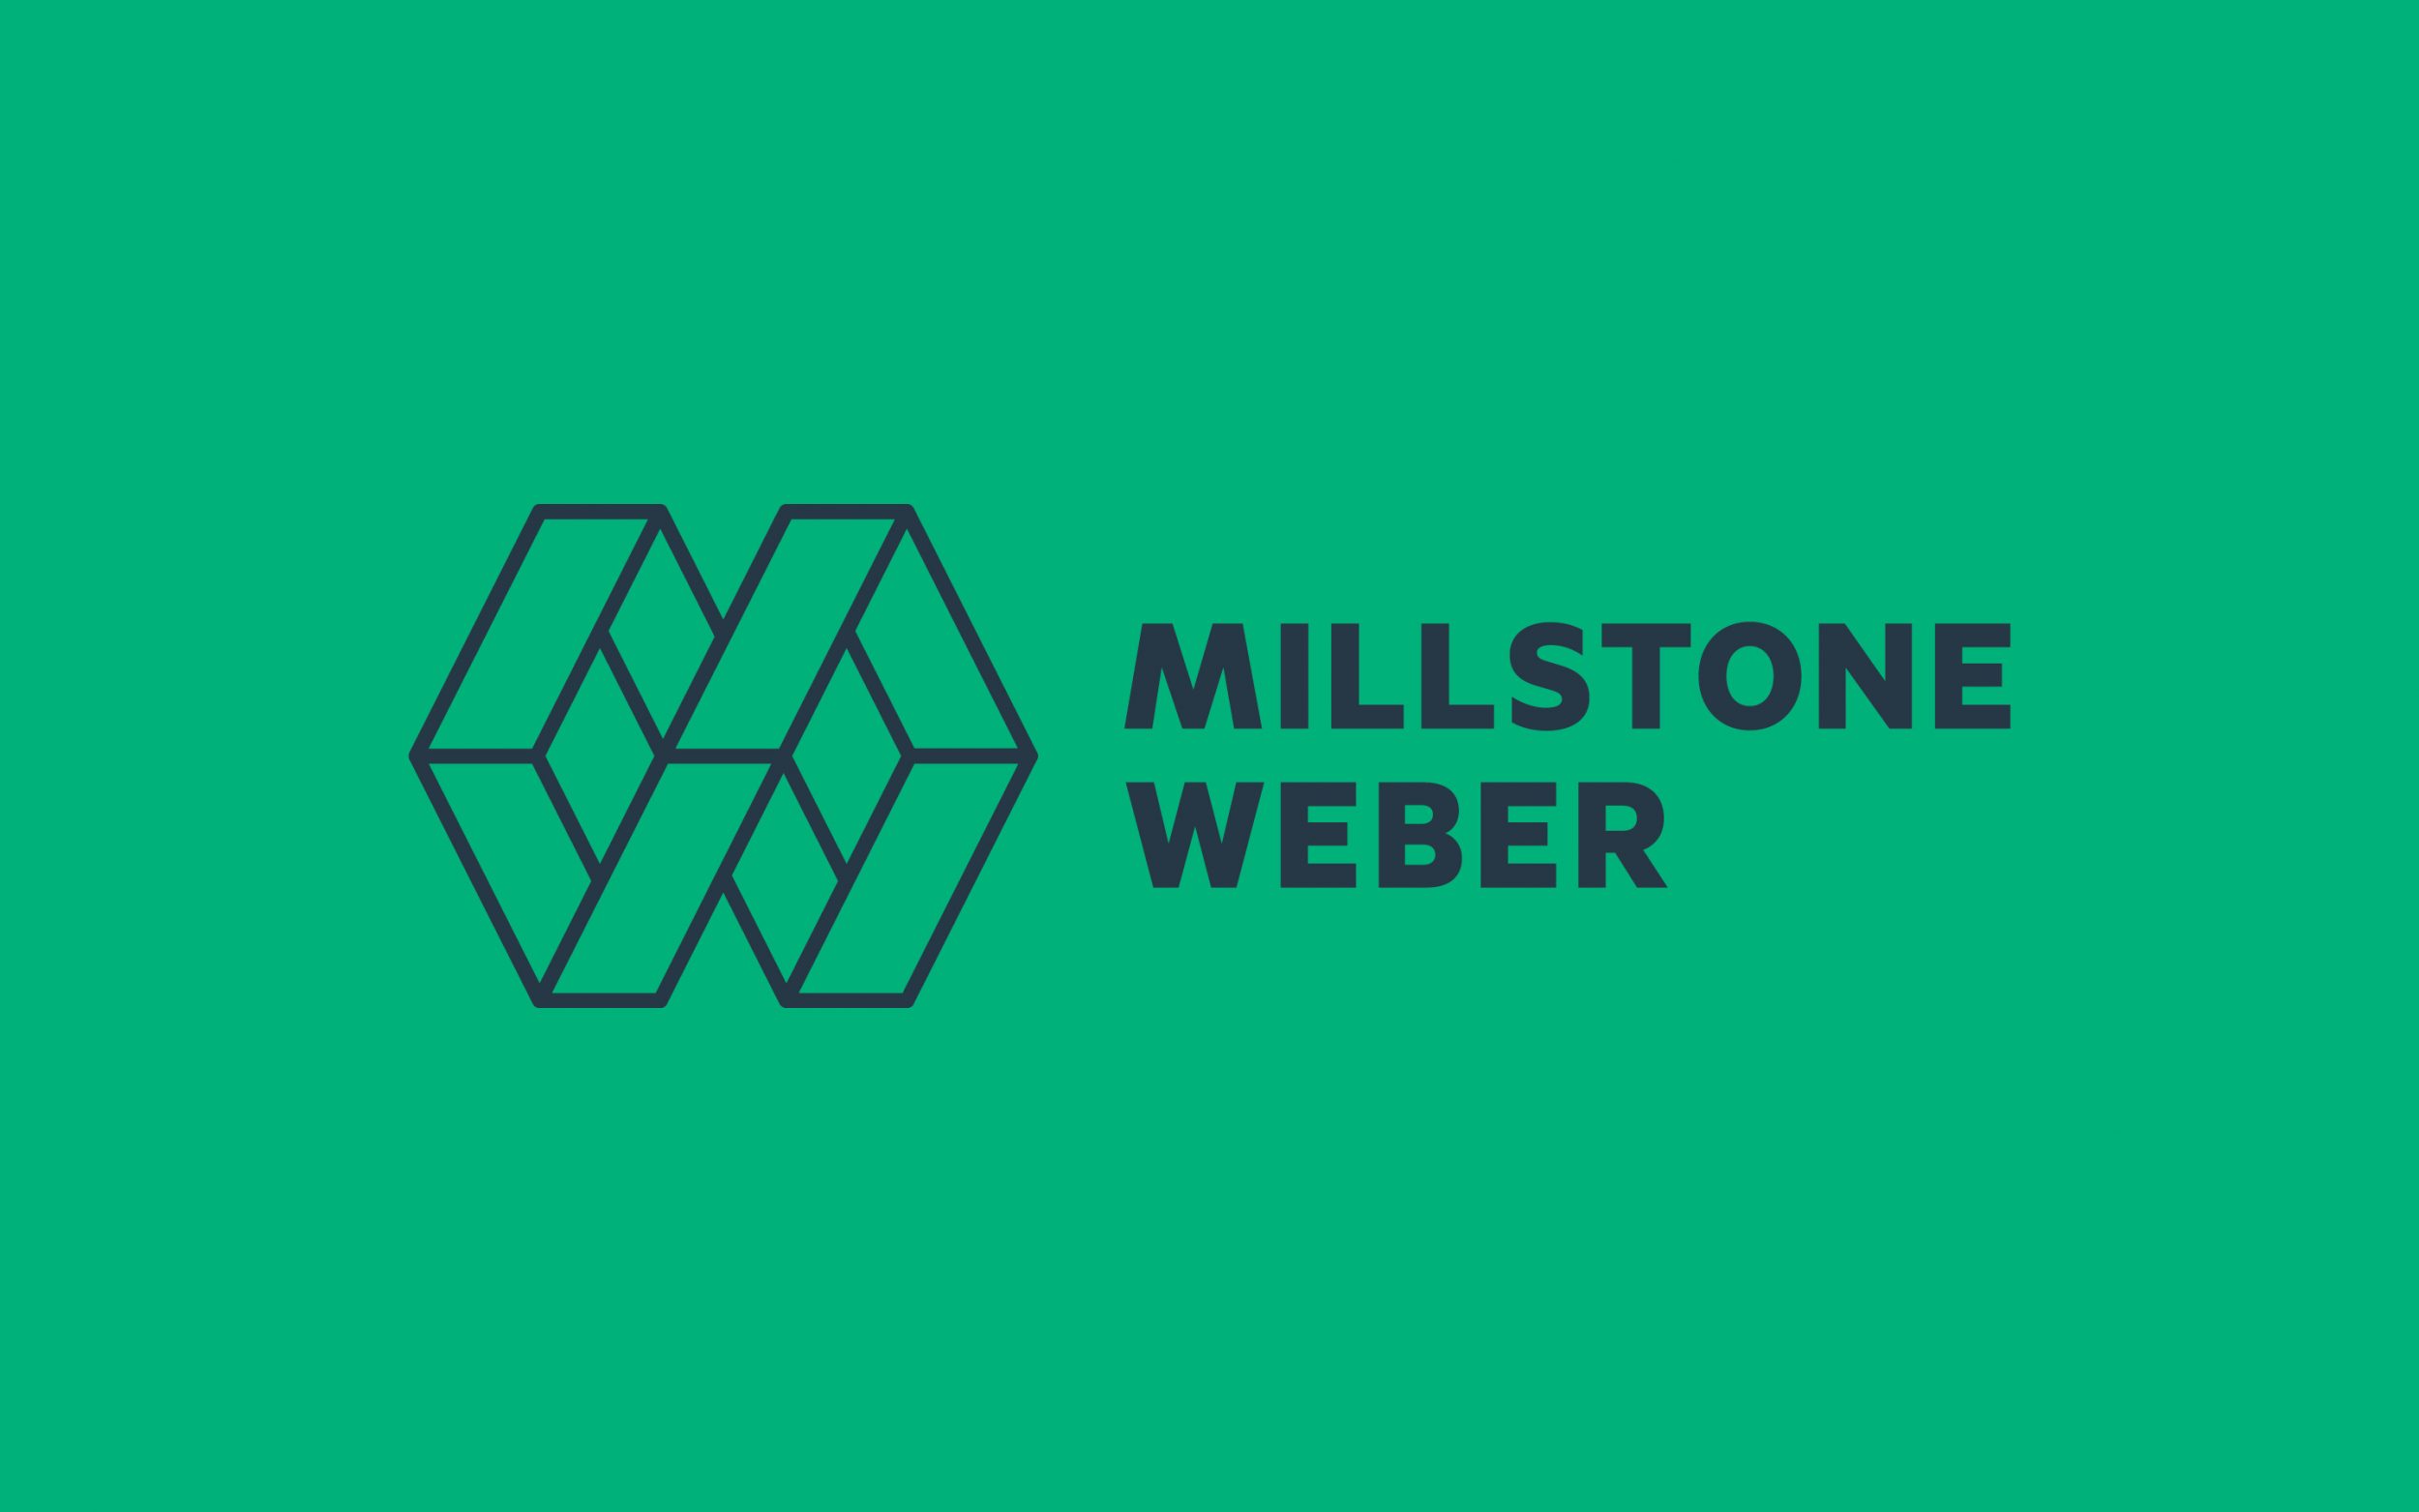 Construction company logo and logotype; Millstone Weber Construction.